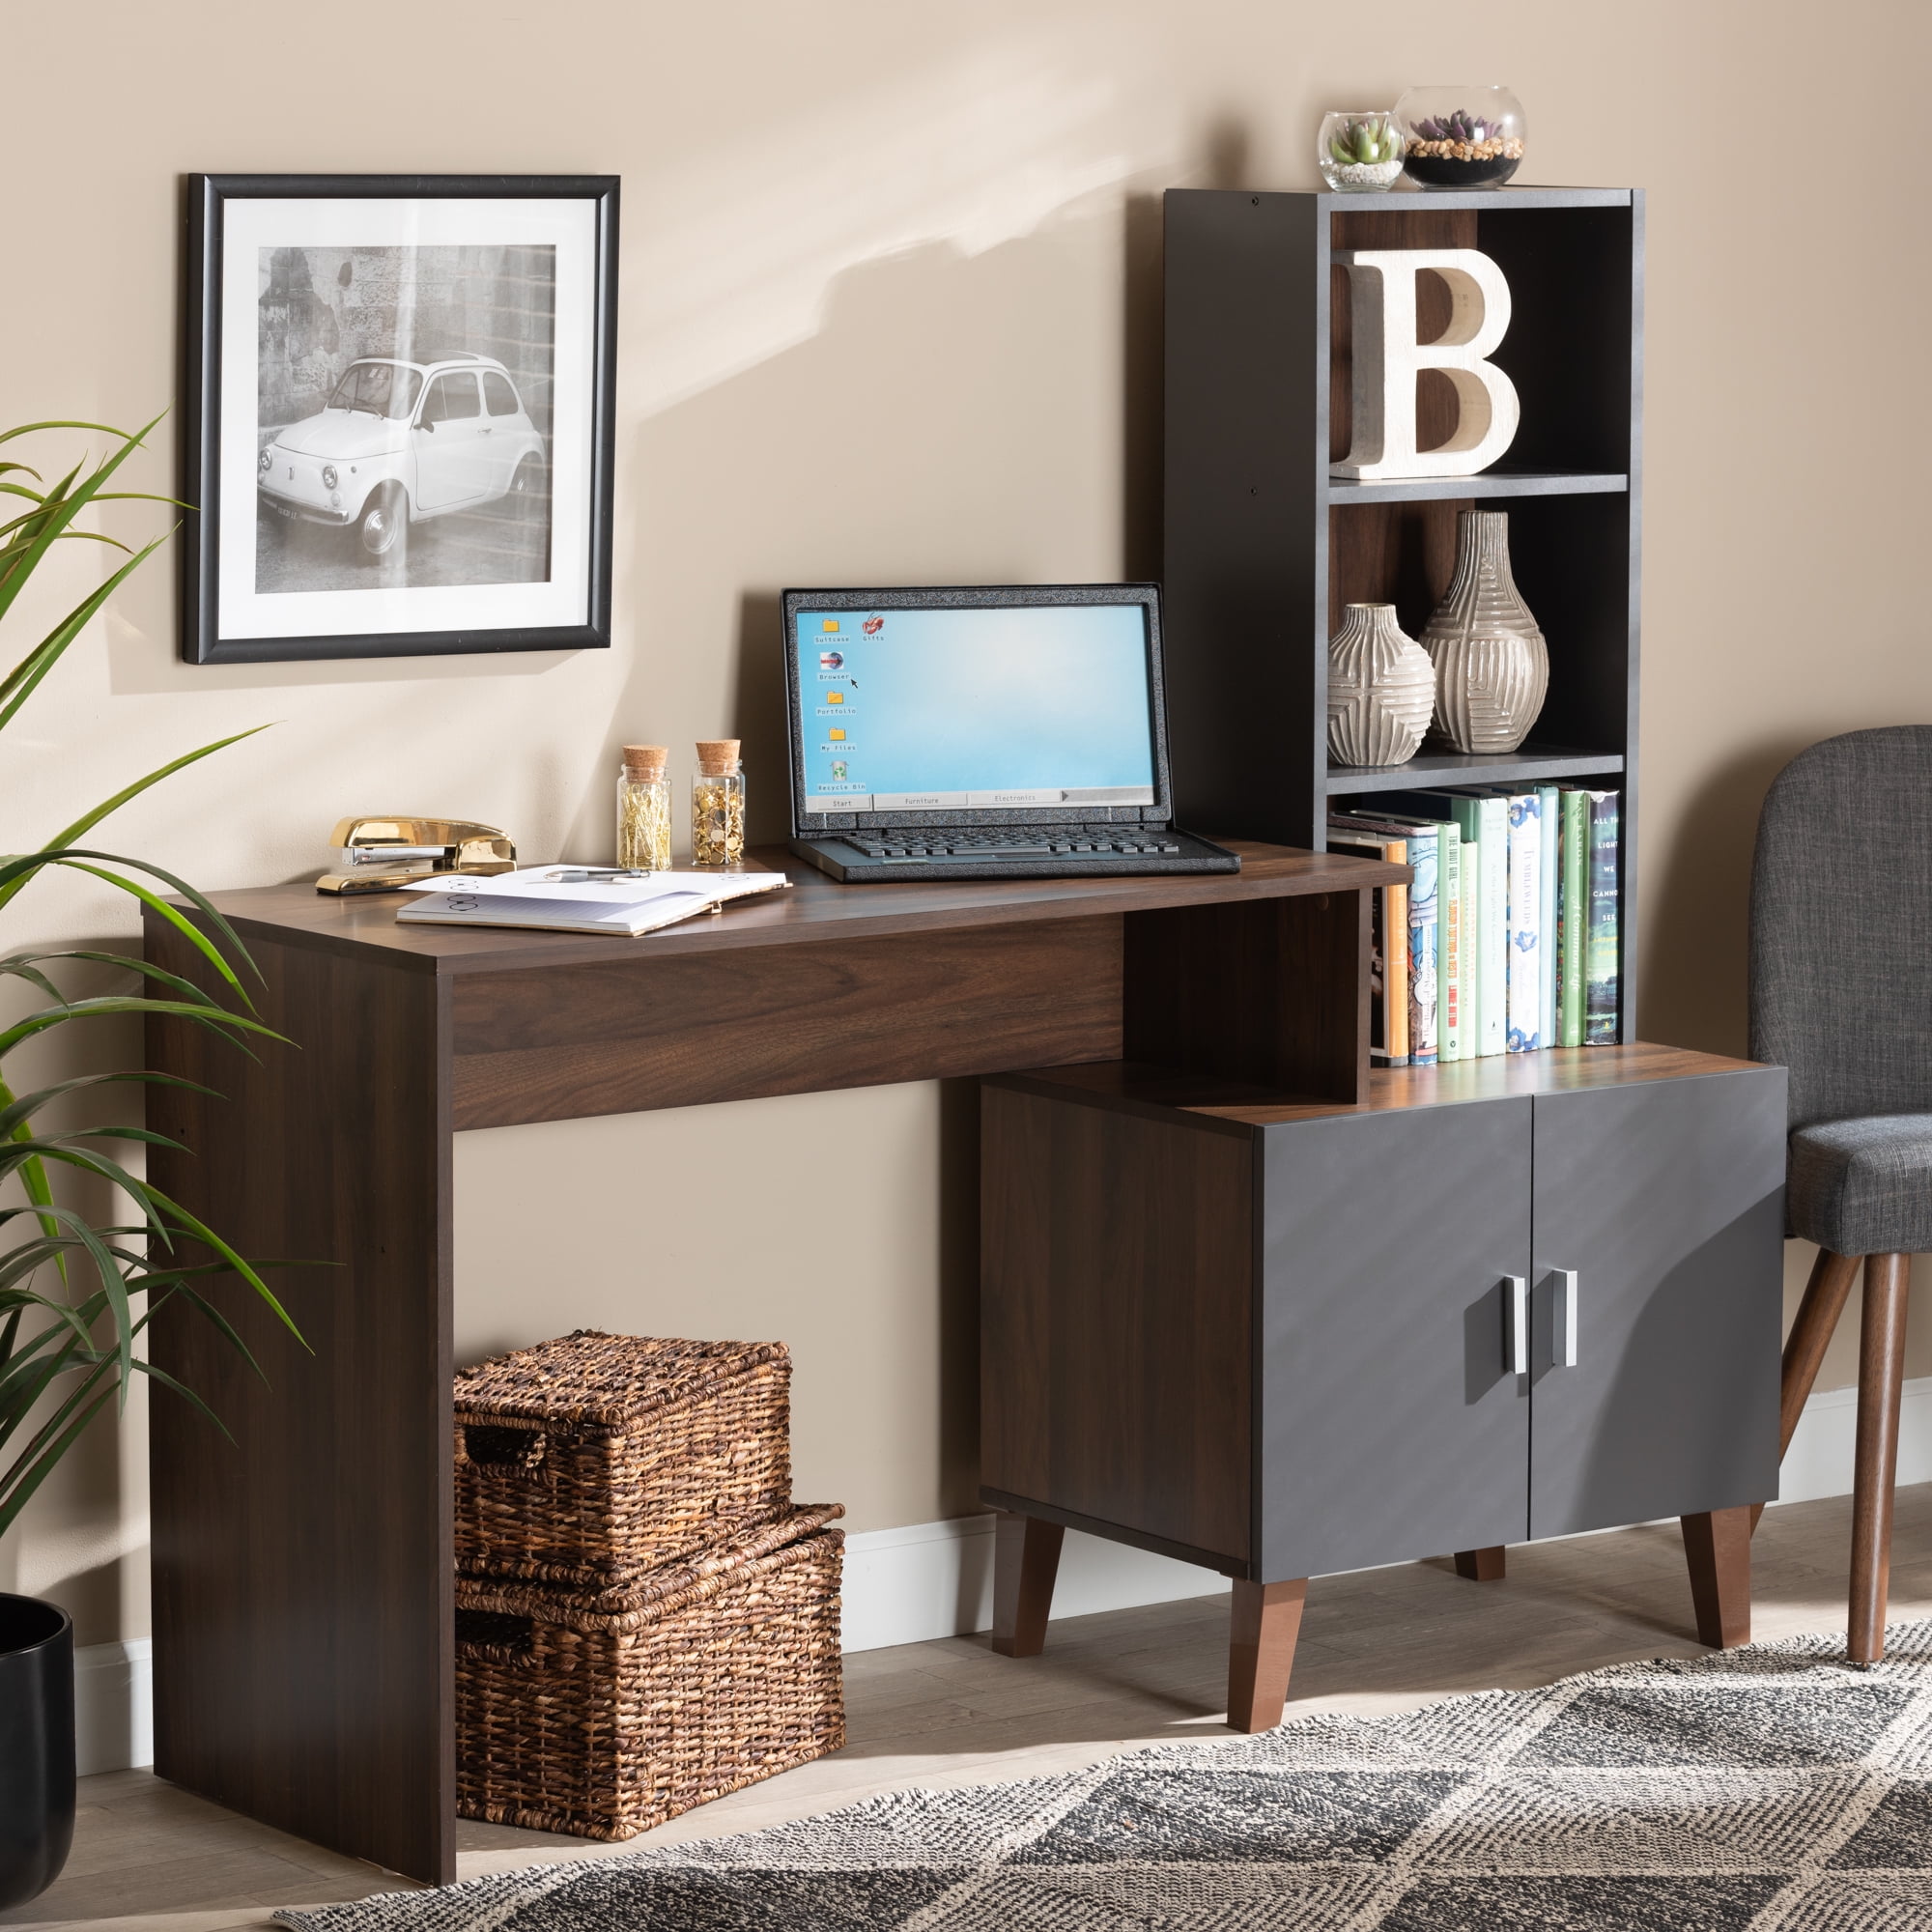 Baxton Studio Fella 2 Drawer Wood Study Desk in Light Brown and Gray 